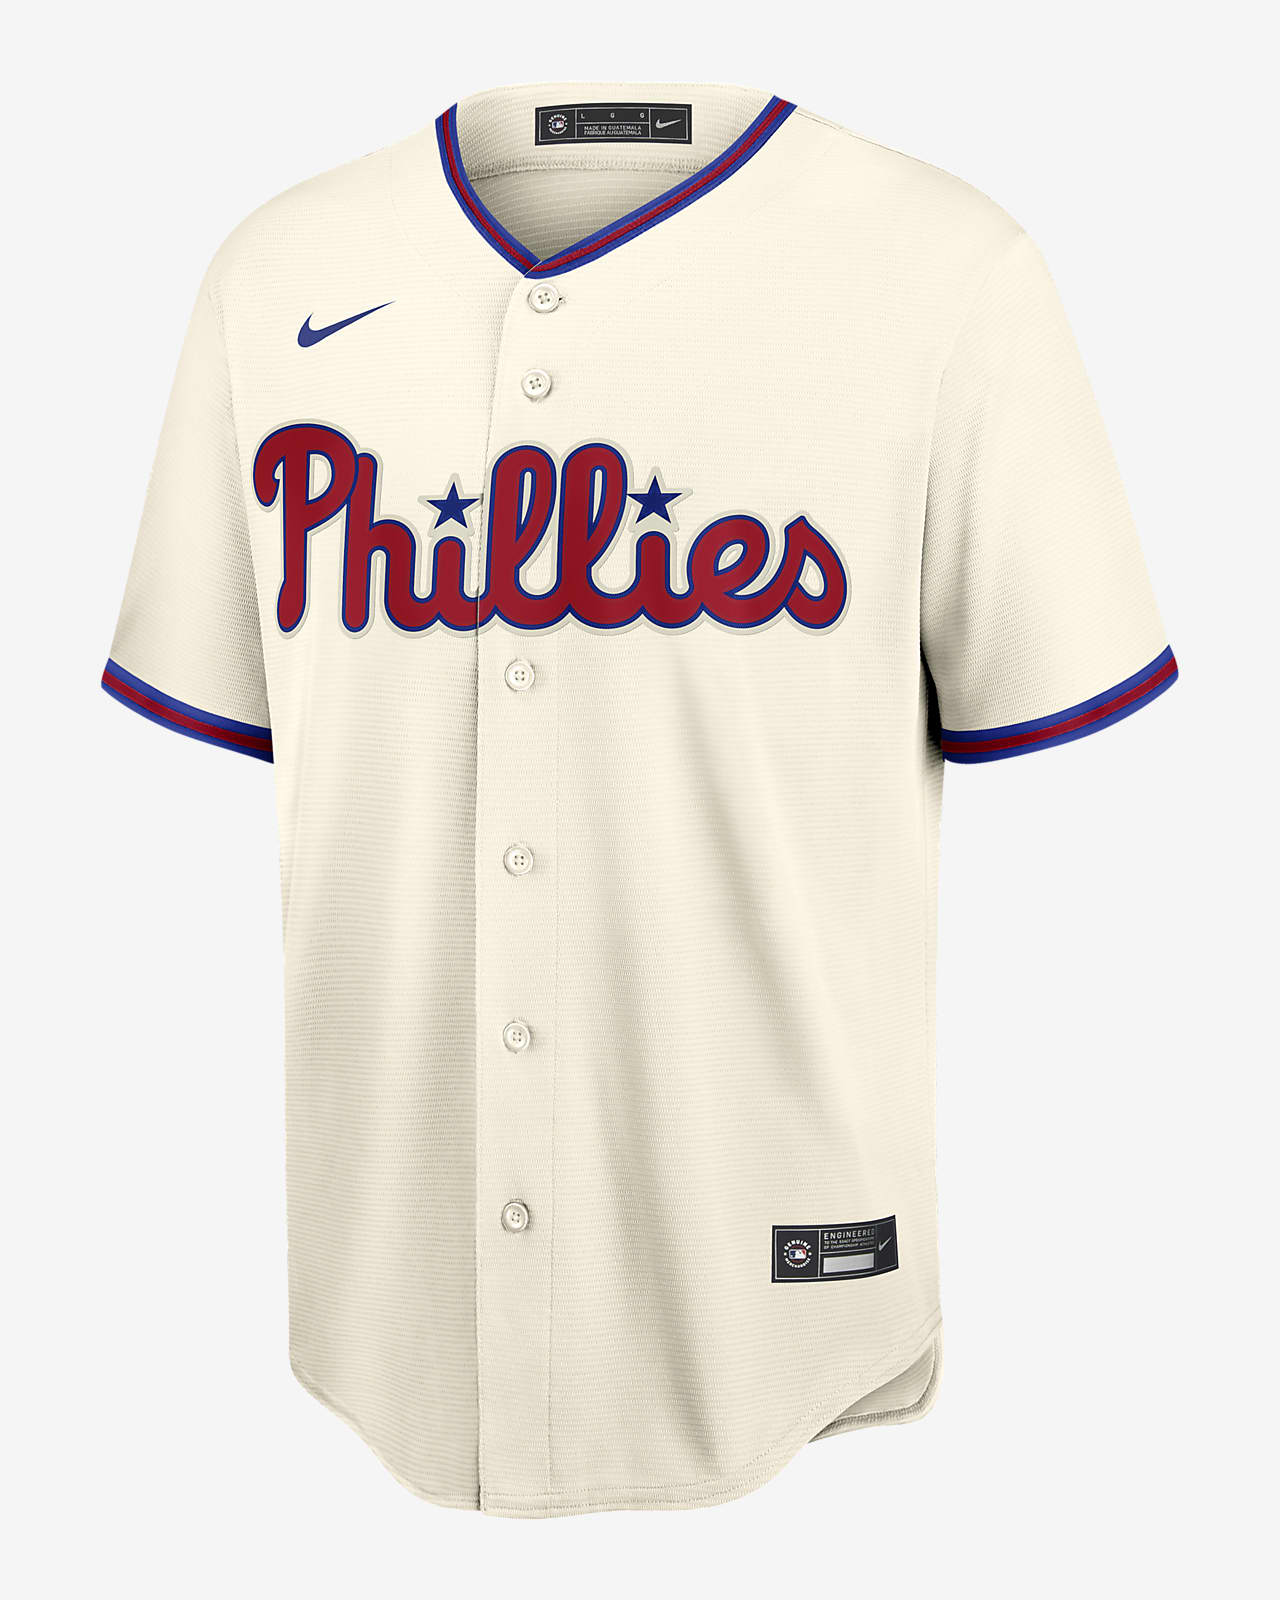 phillies authentic jerseys